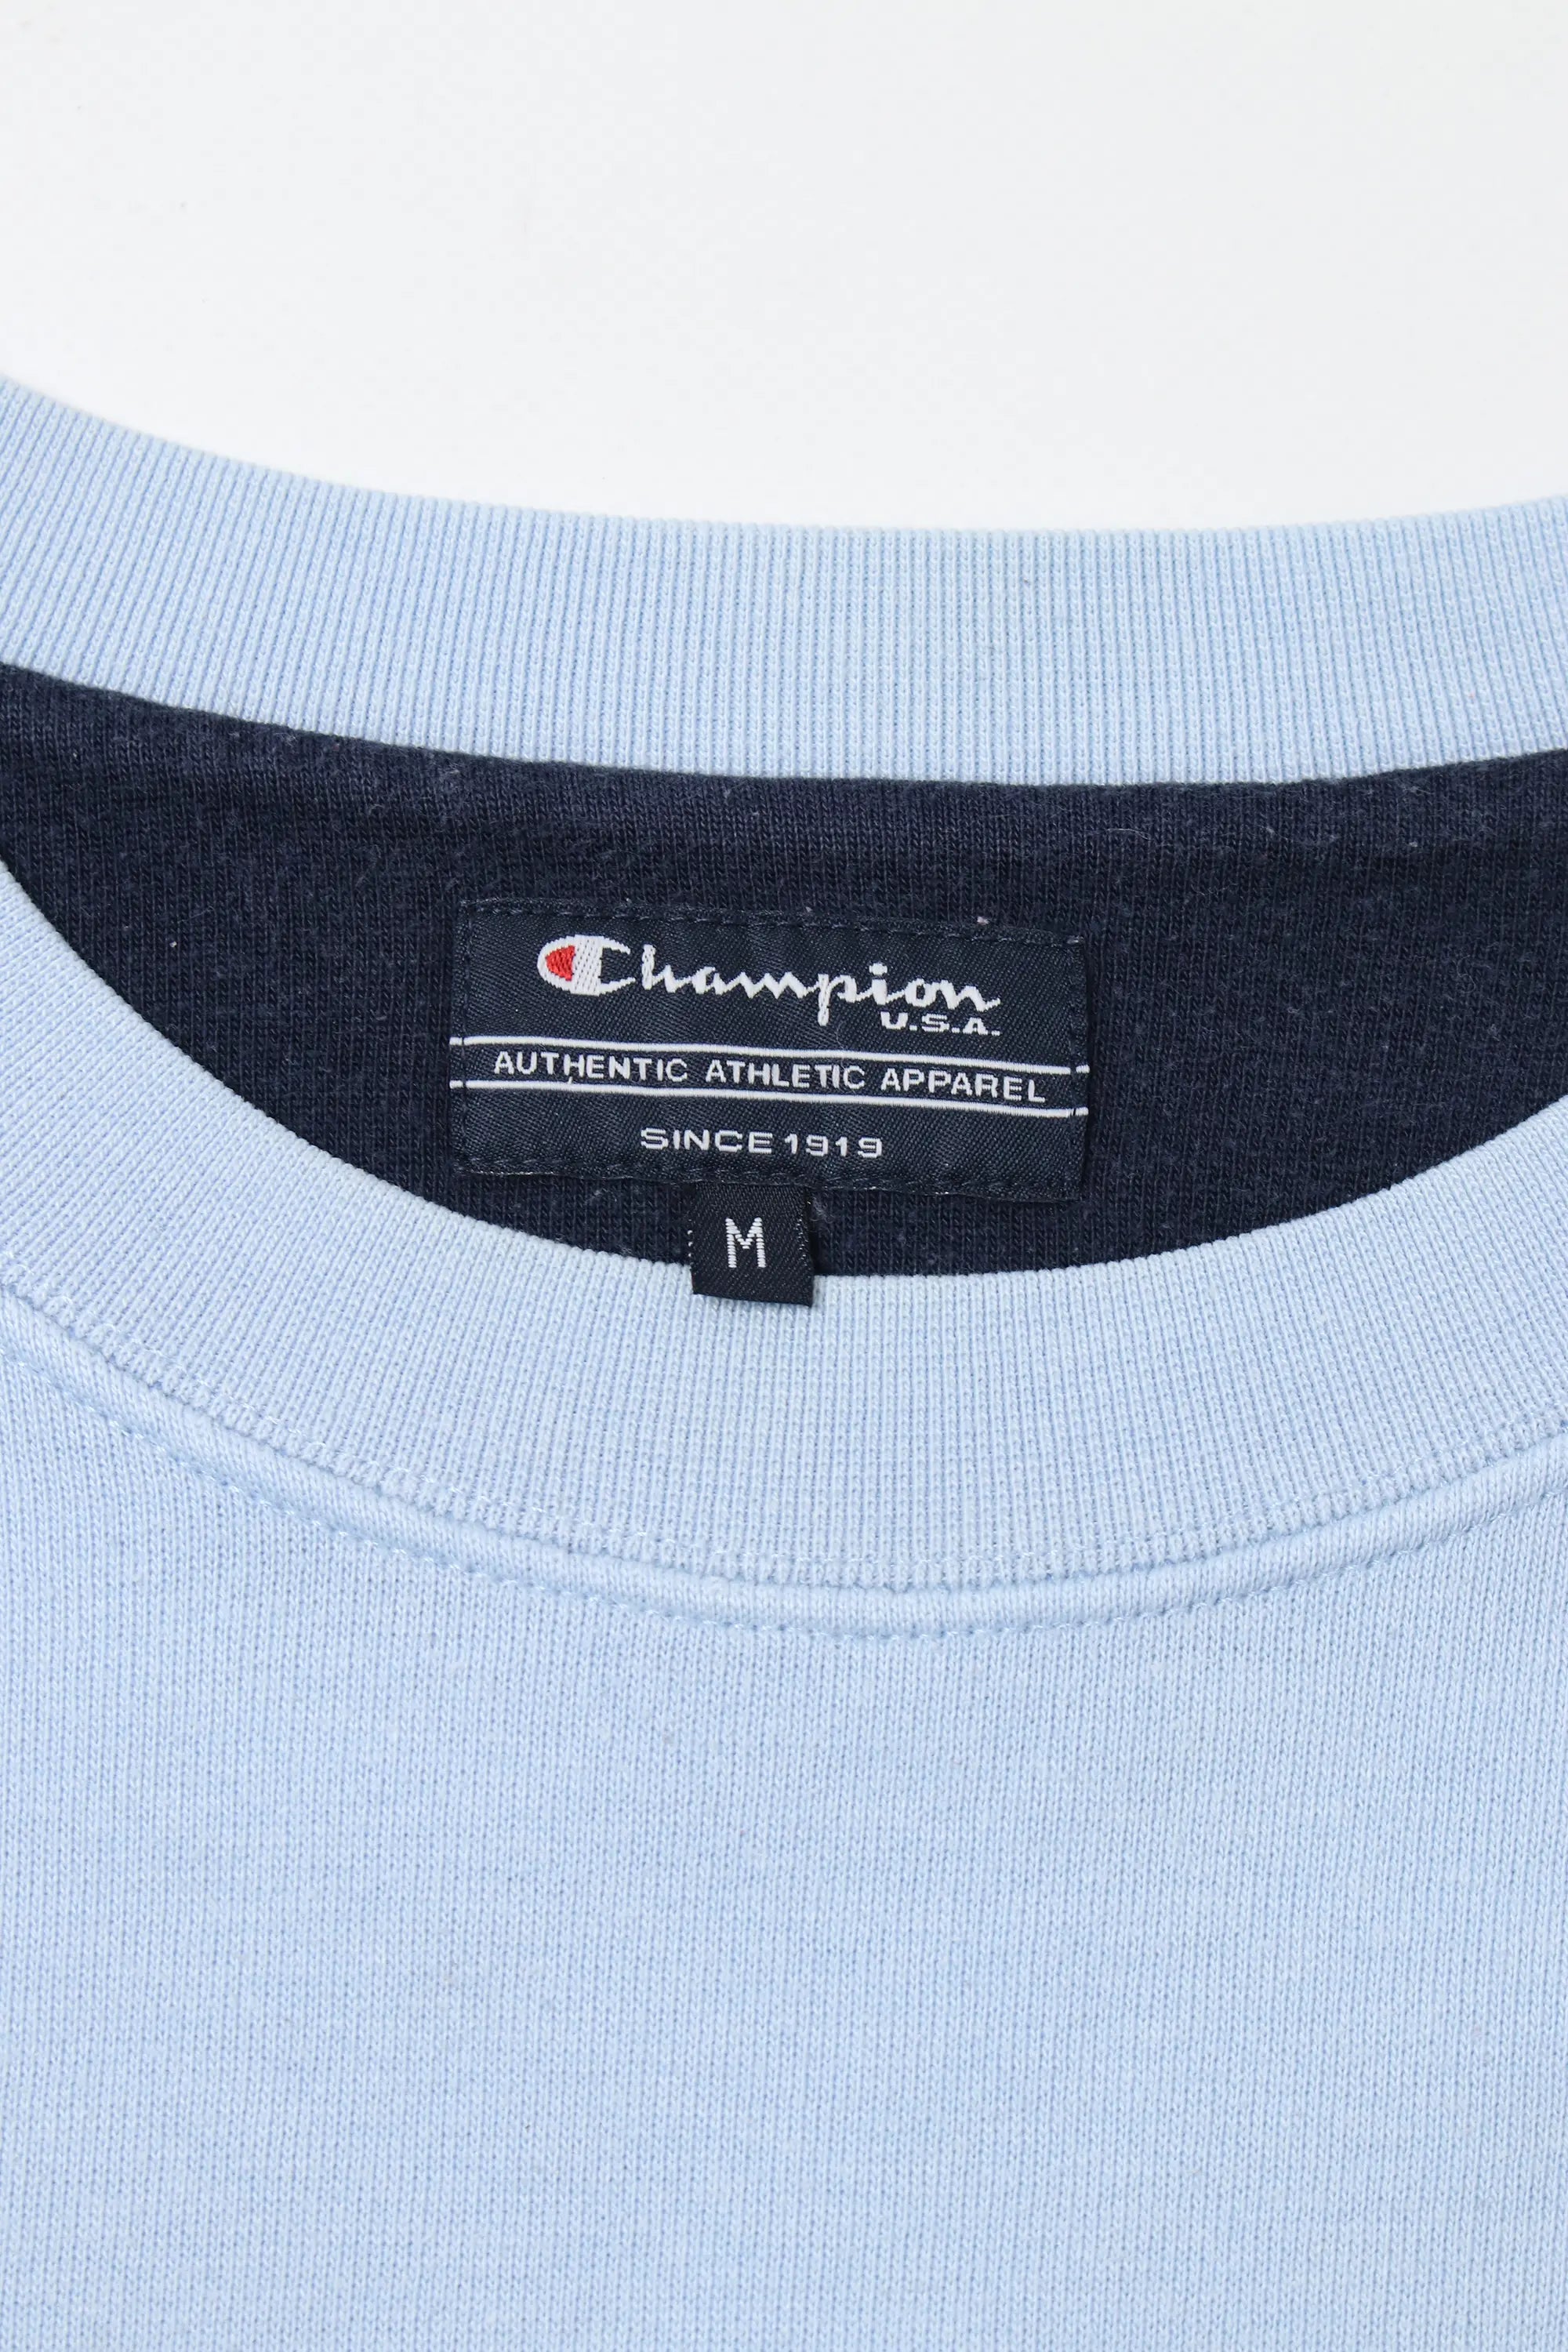 Champion Spellout Sweatshirt